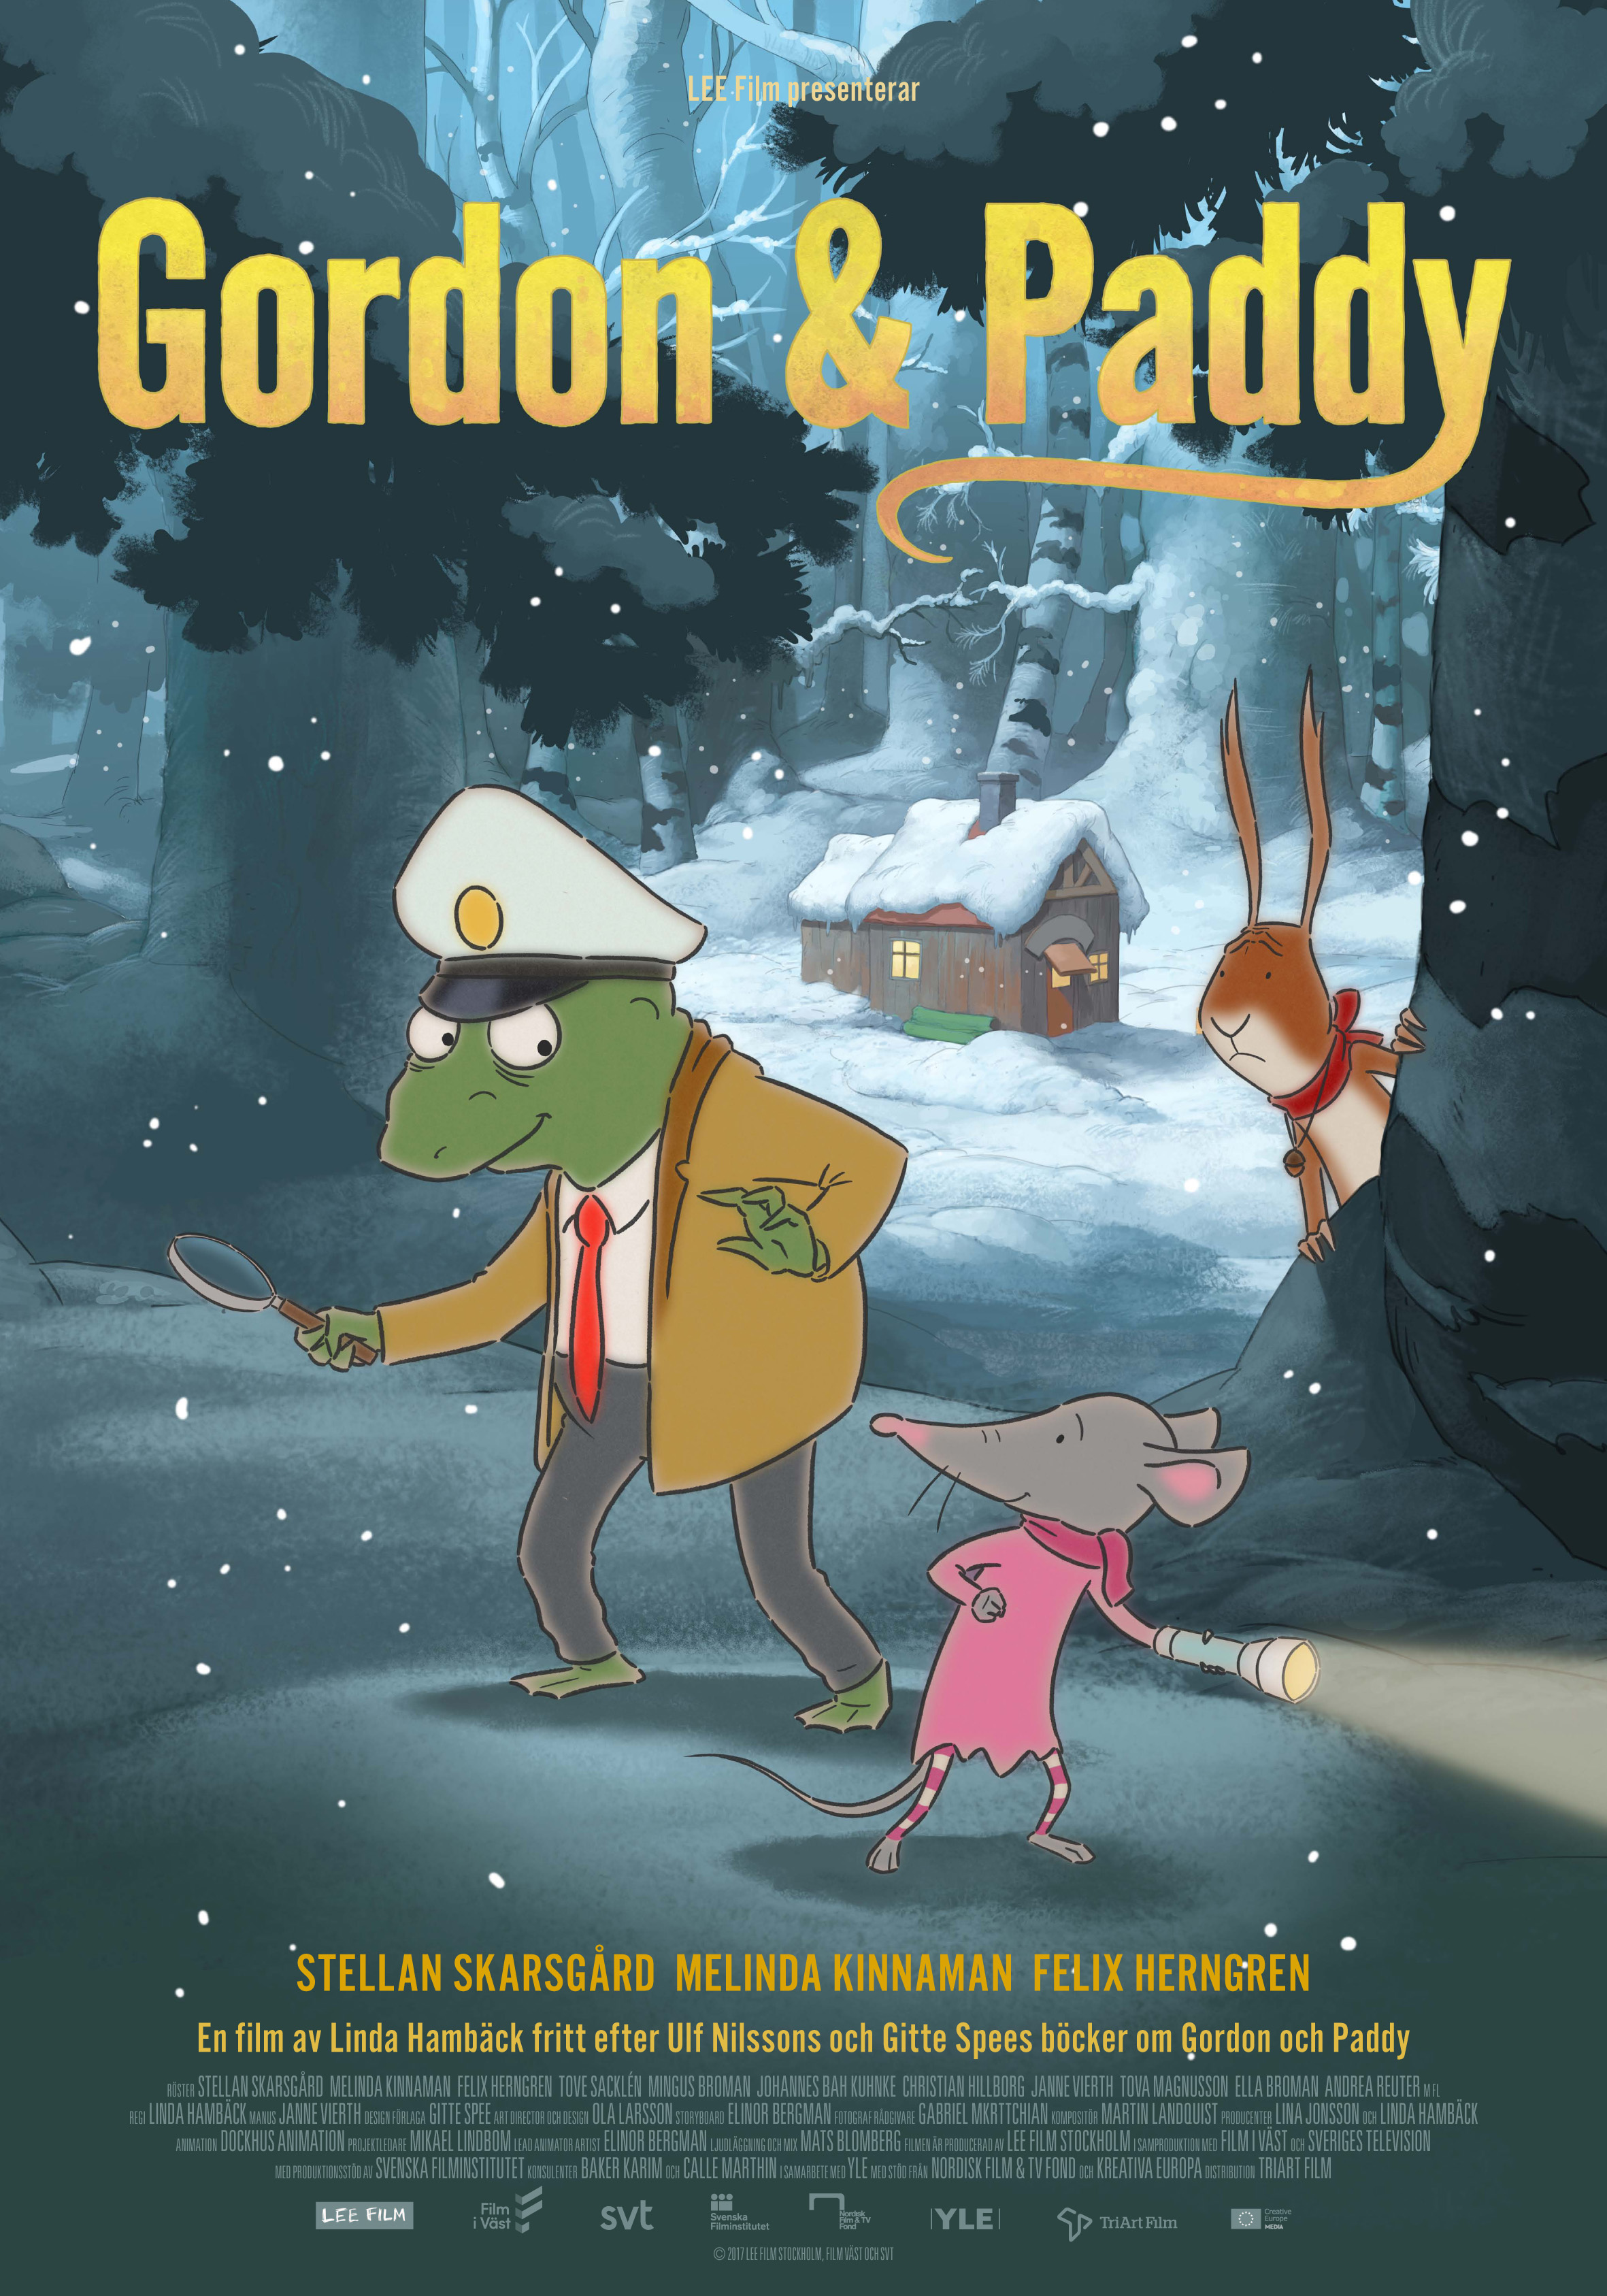 Stiahni si Filmy Kreslené Gordon a Paddy / Gordon och Paddy (2017)(CZ)[WebRip][1080p] = CSFD 67%